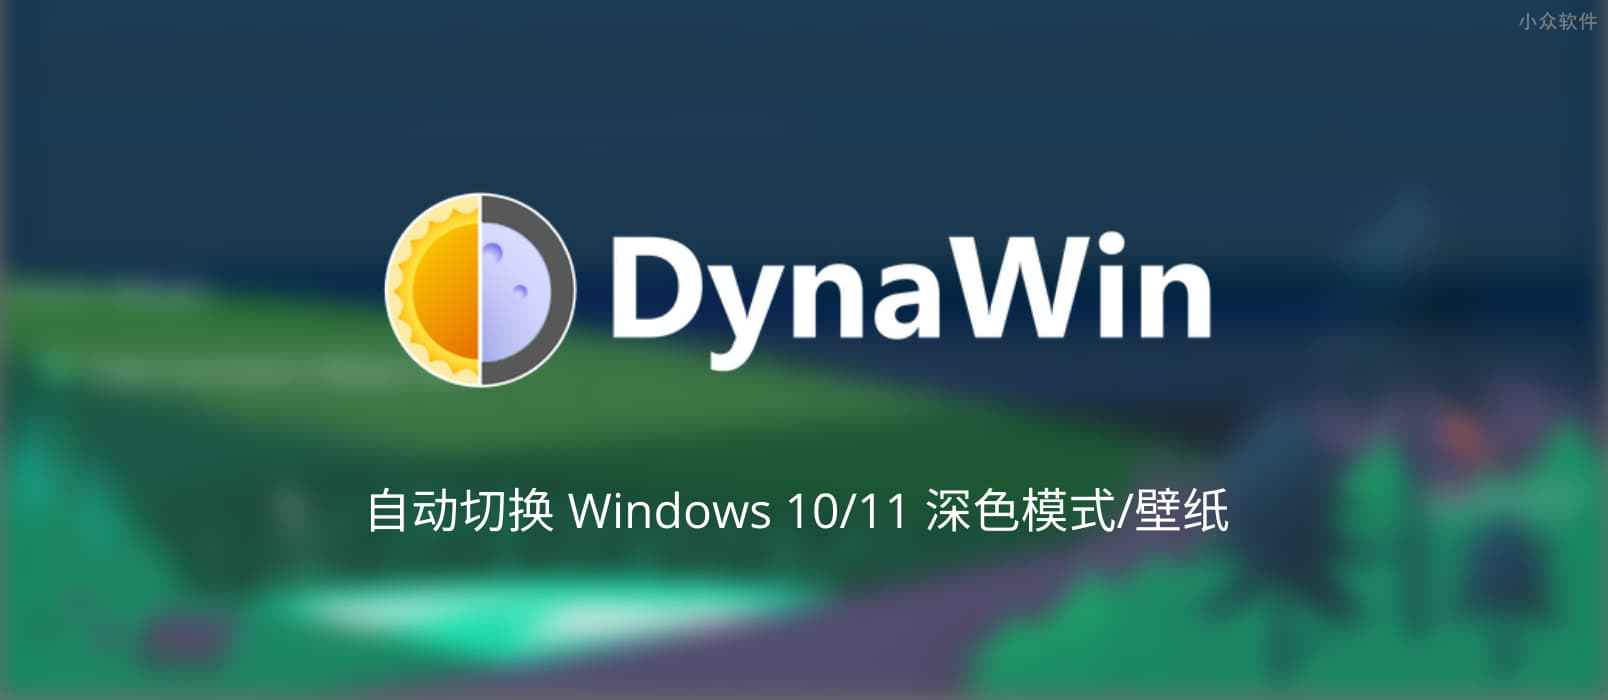 DynaWin - 让 Windows 10/11 根据时间自动切换深色模式，还支持自动更换壁纸